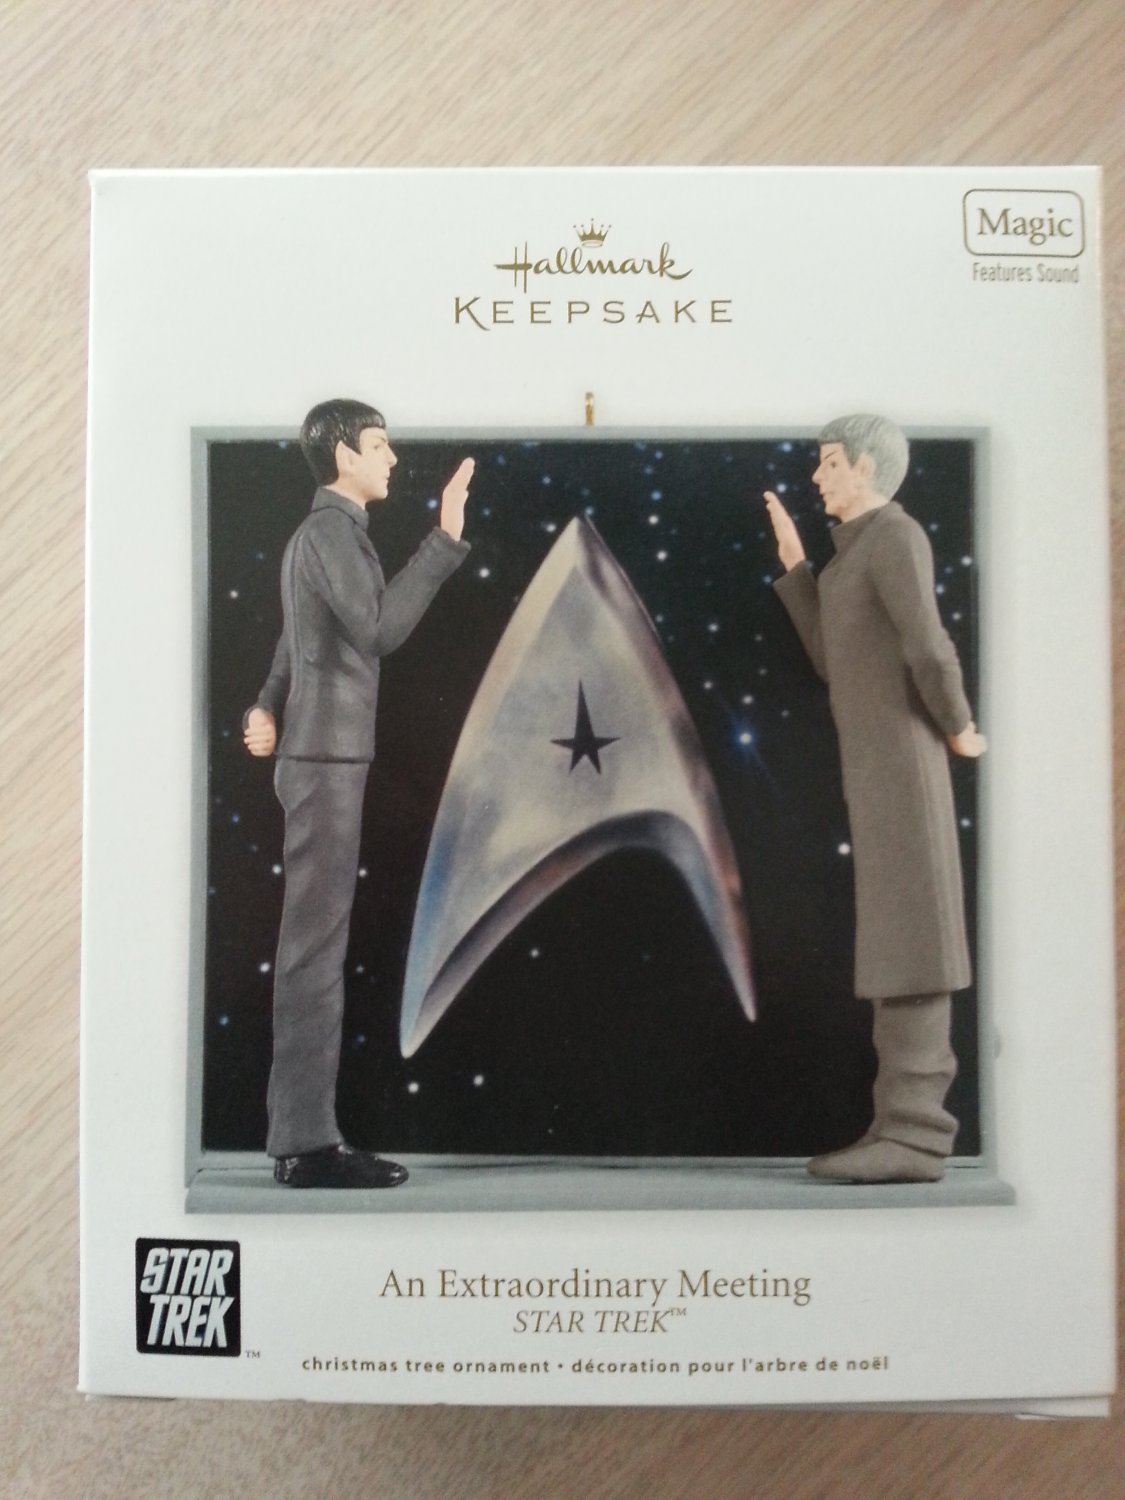 Hallmark Star Trek "An Extraordinary Meeting" Ornament from 2012-LISTEN TO DIALOGUE FROM THIS SCENE!